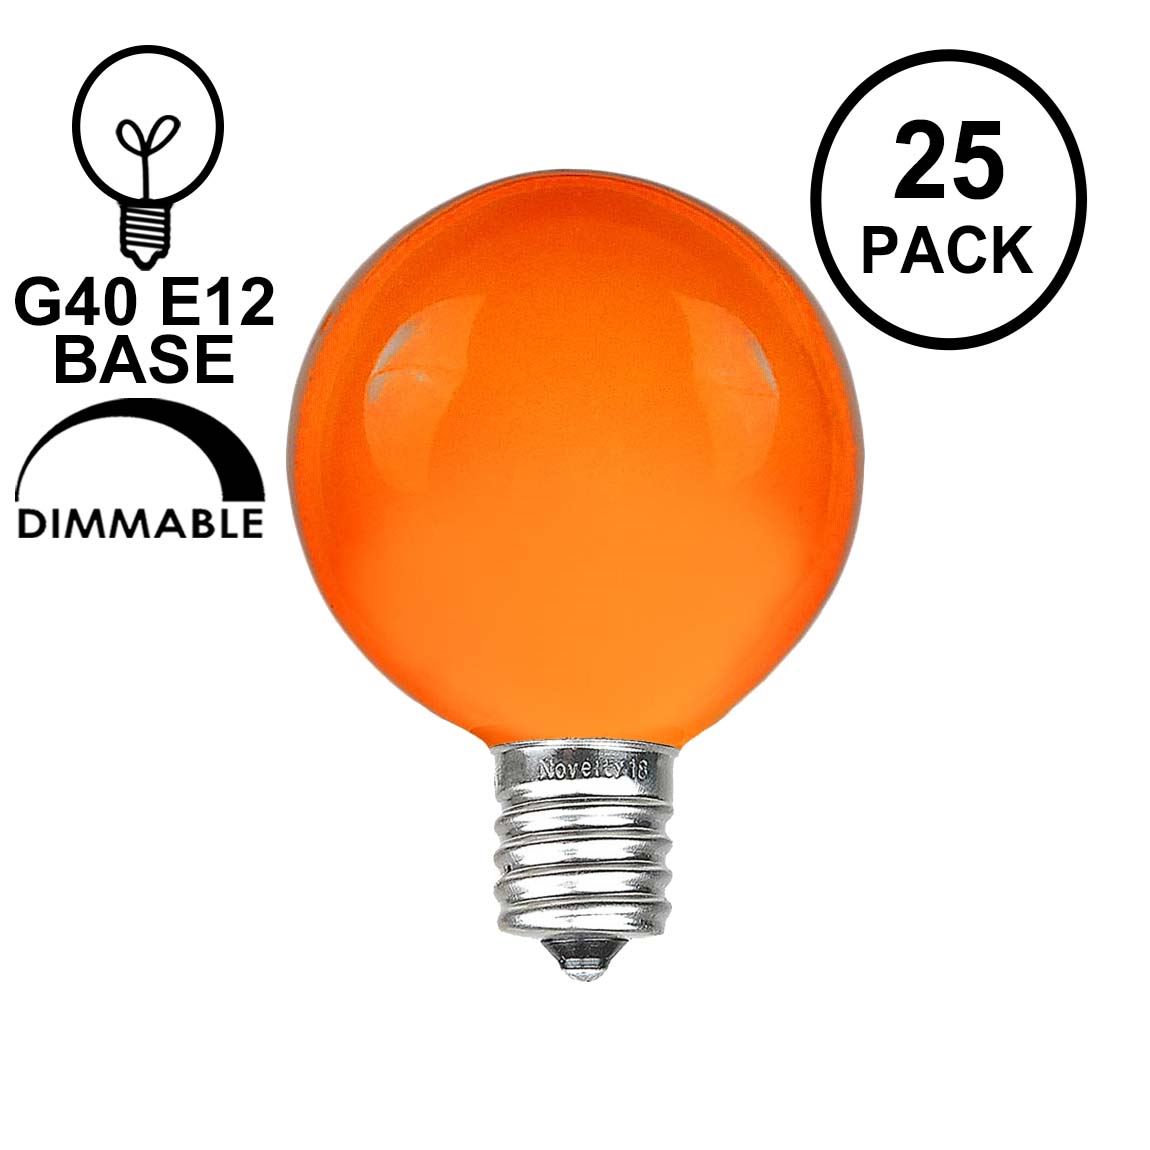 Box of 25 C7 Amber Orange Triple Dipped Transparent Christmas Bulbs 5 Watt 